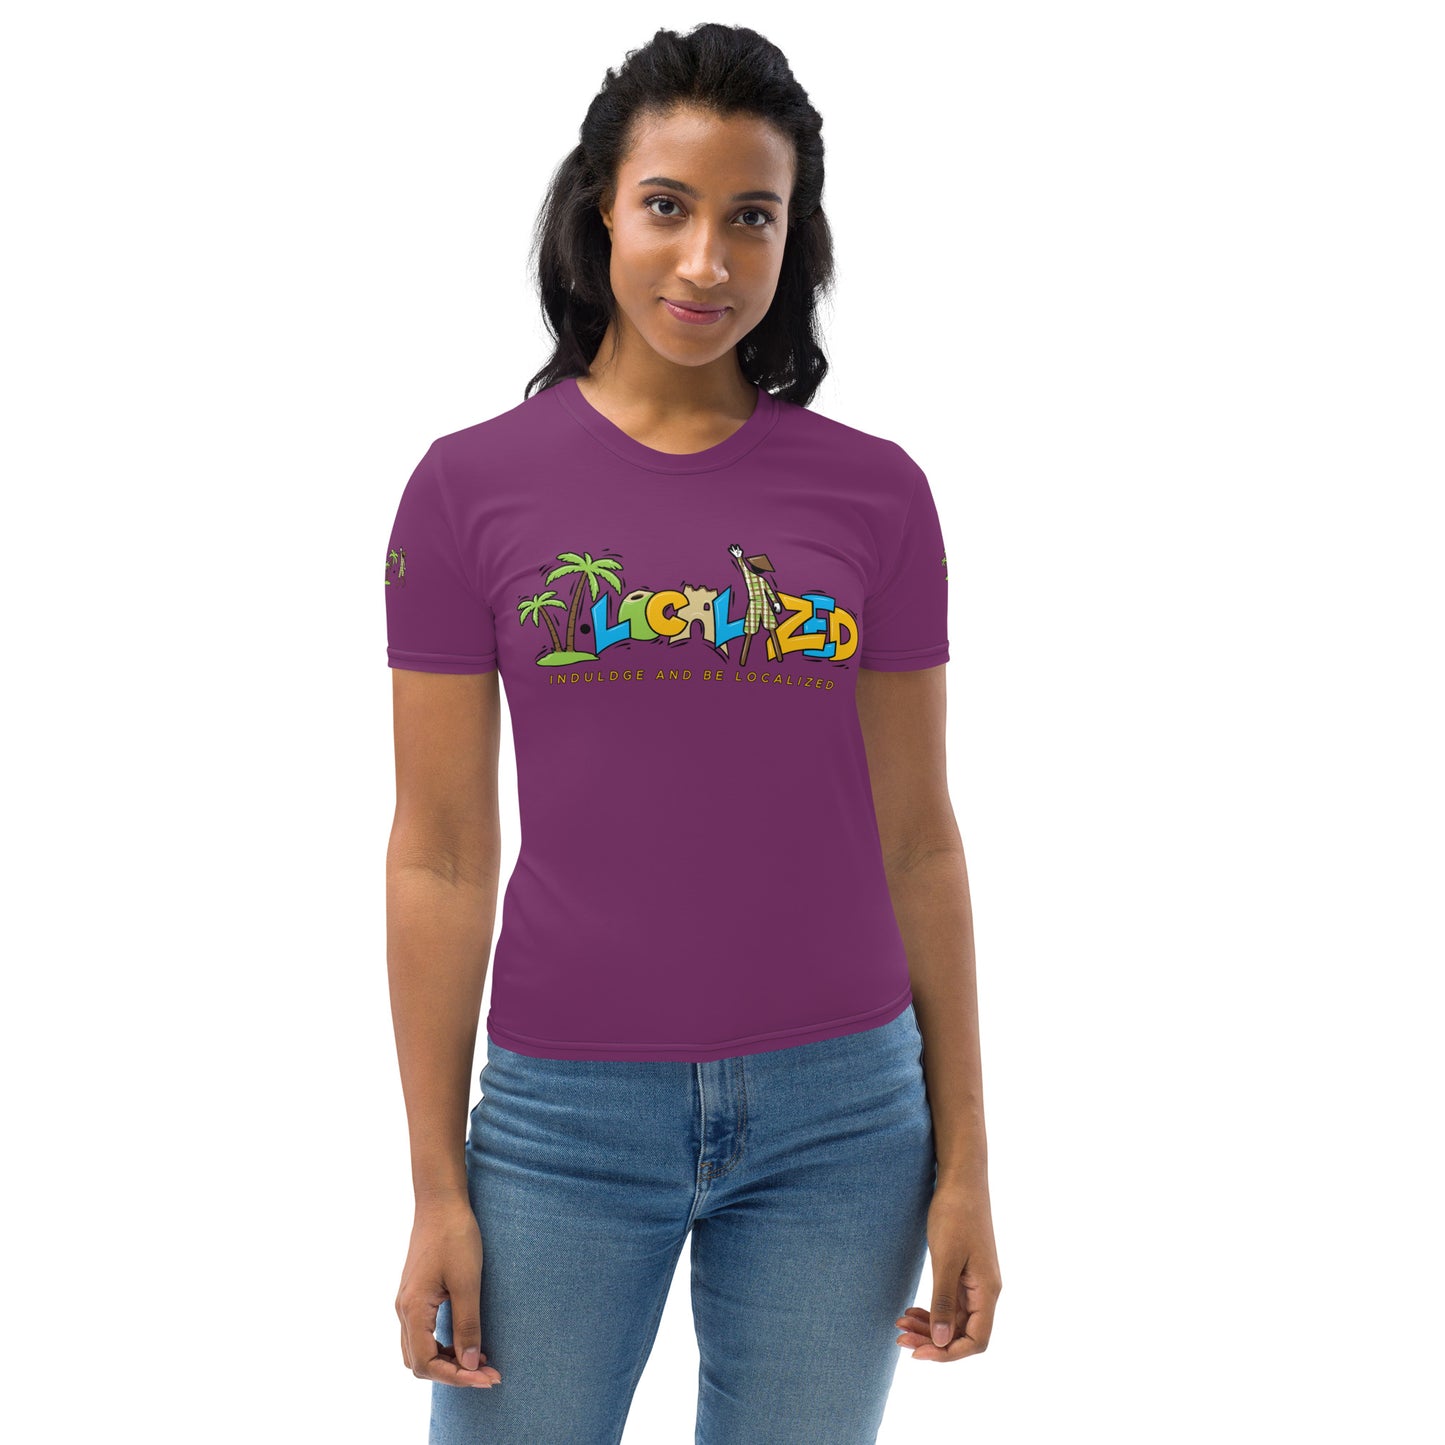 V.Localized Purple (Regular) Dry-fit Women's T-shirt